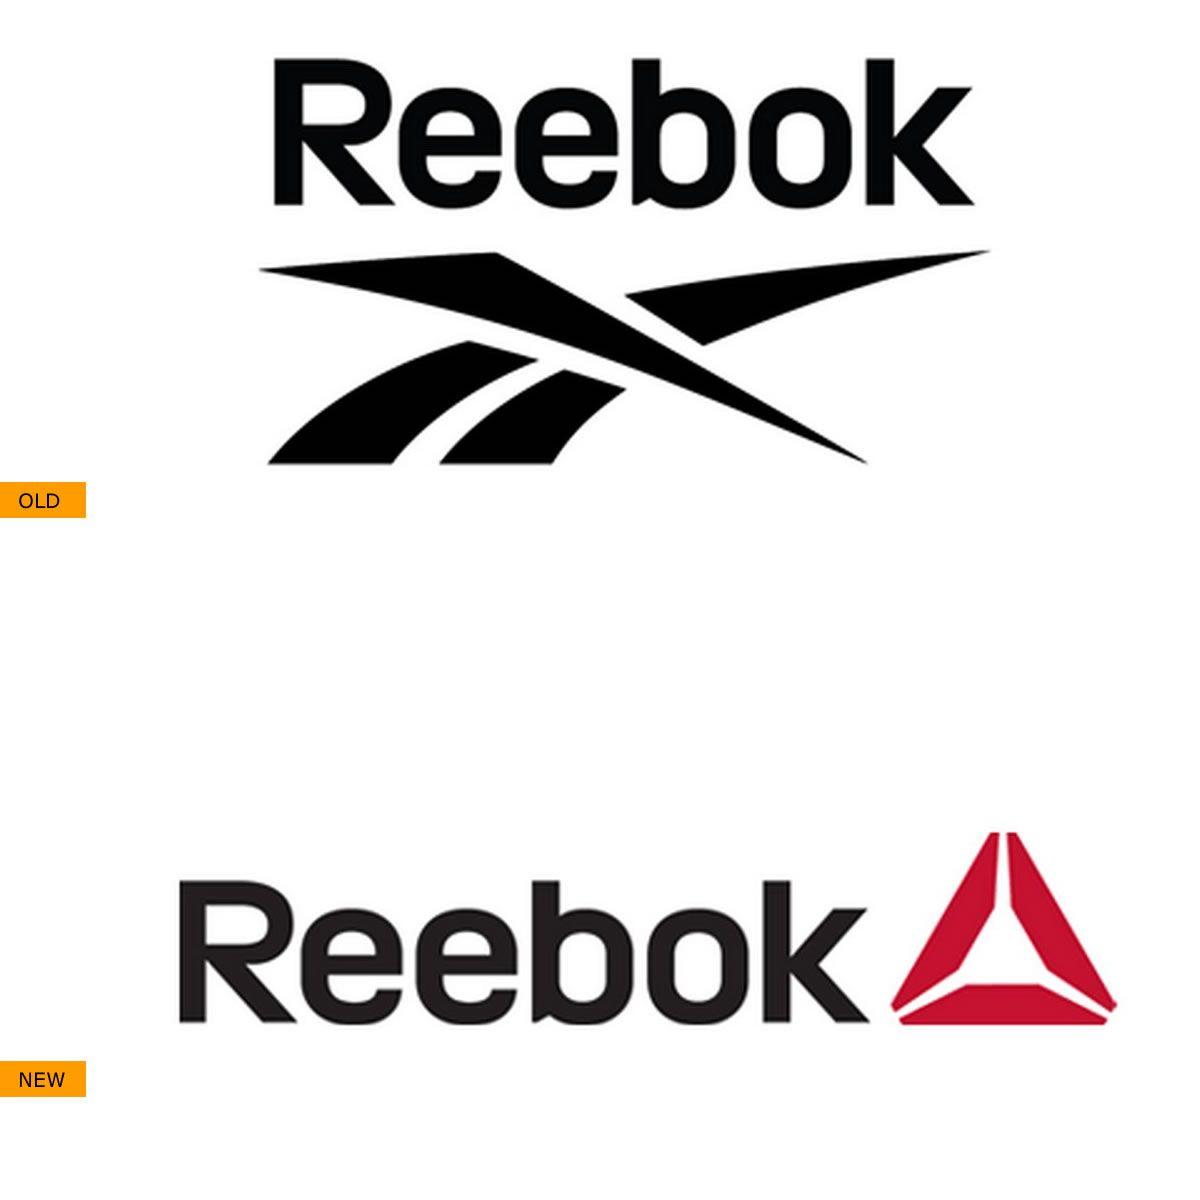 Old Reebok Logo - New Reebok logo 2014 | Design : Logo Evolution | Logos, Company logo ...